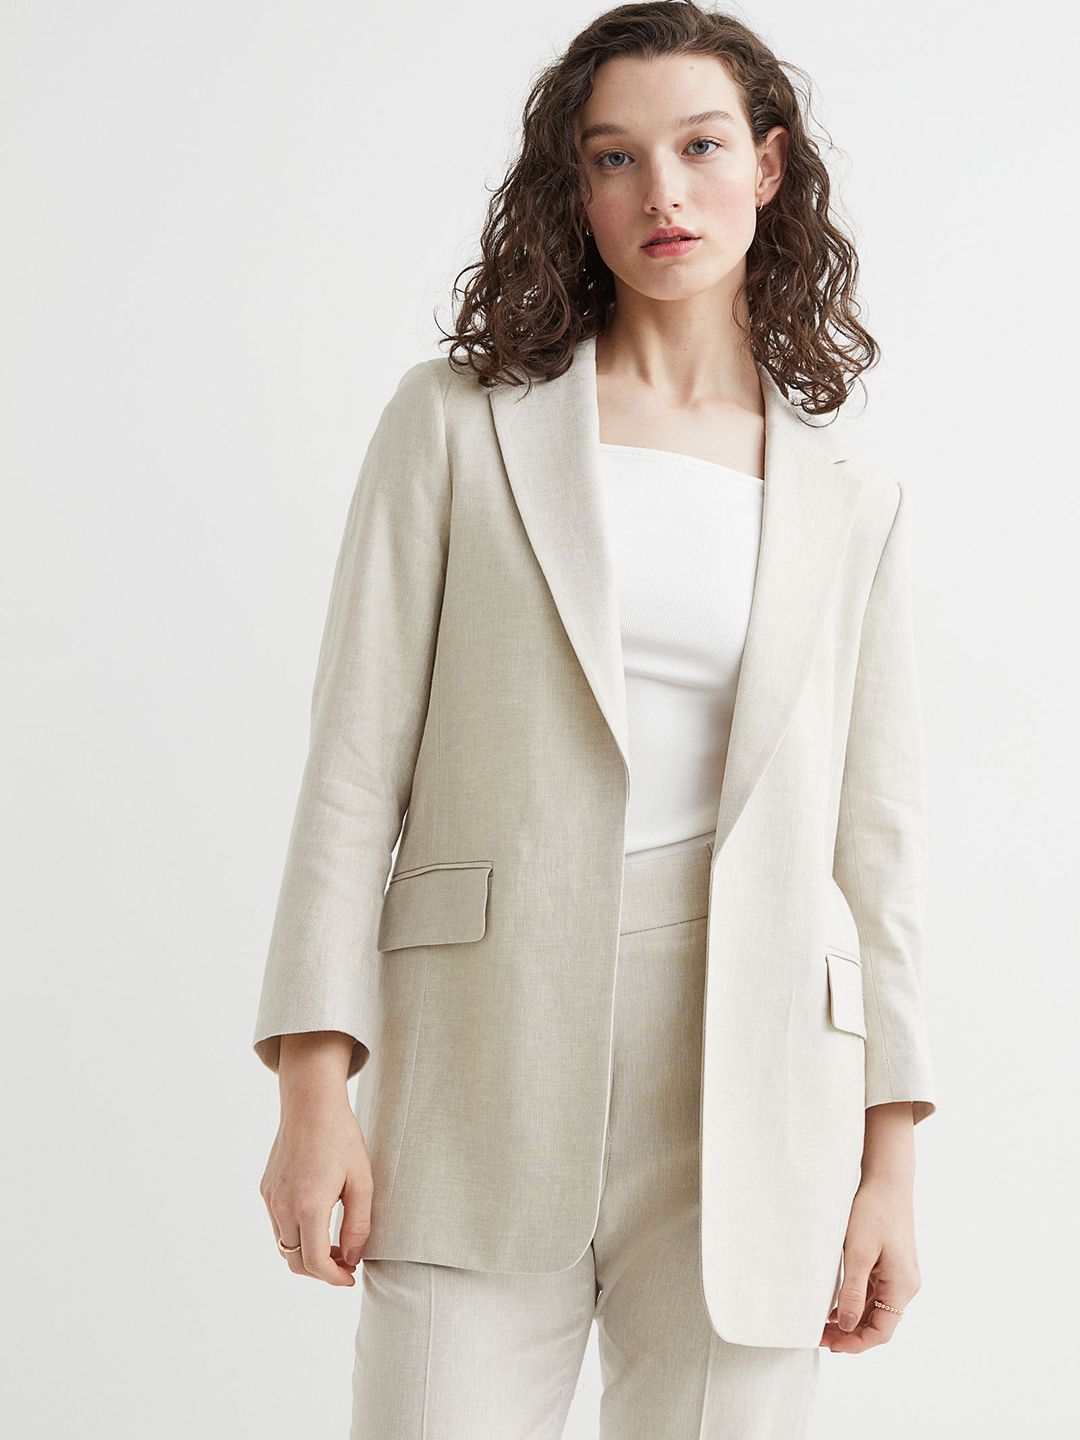 H&M Women Beige Linen-blend Jacket Price in India